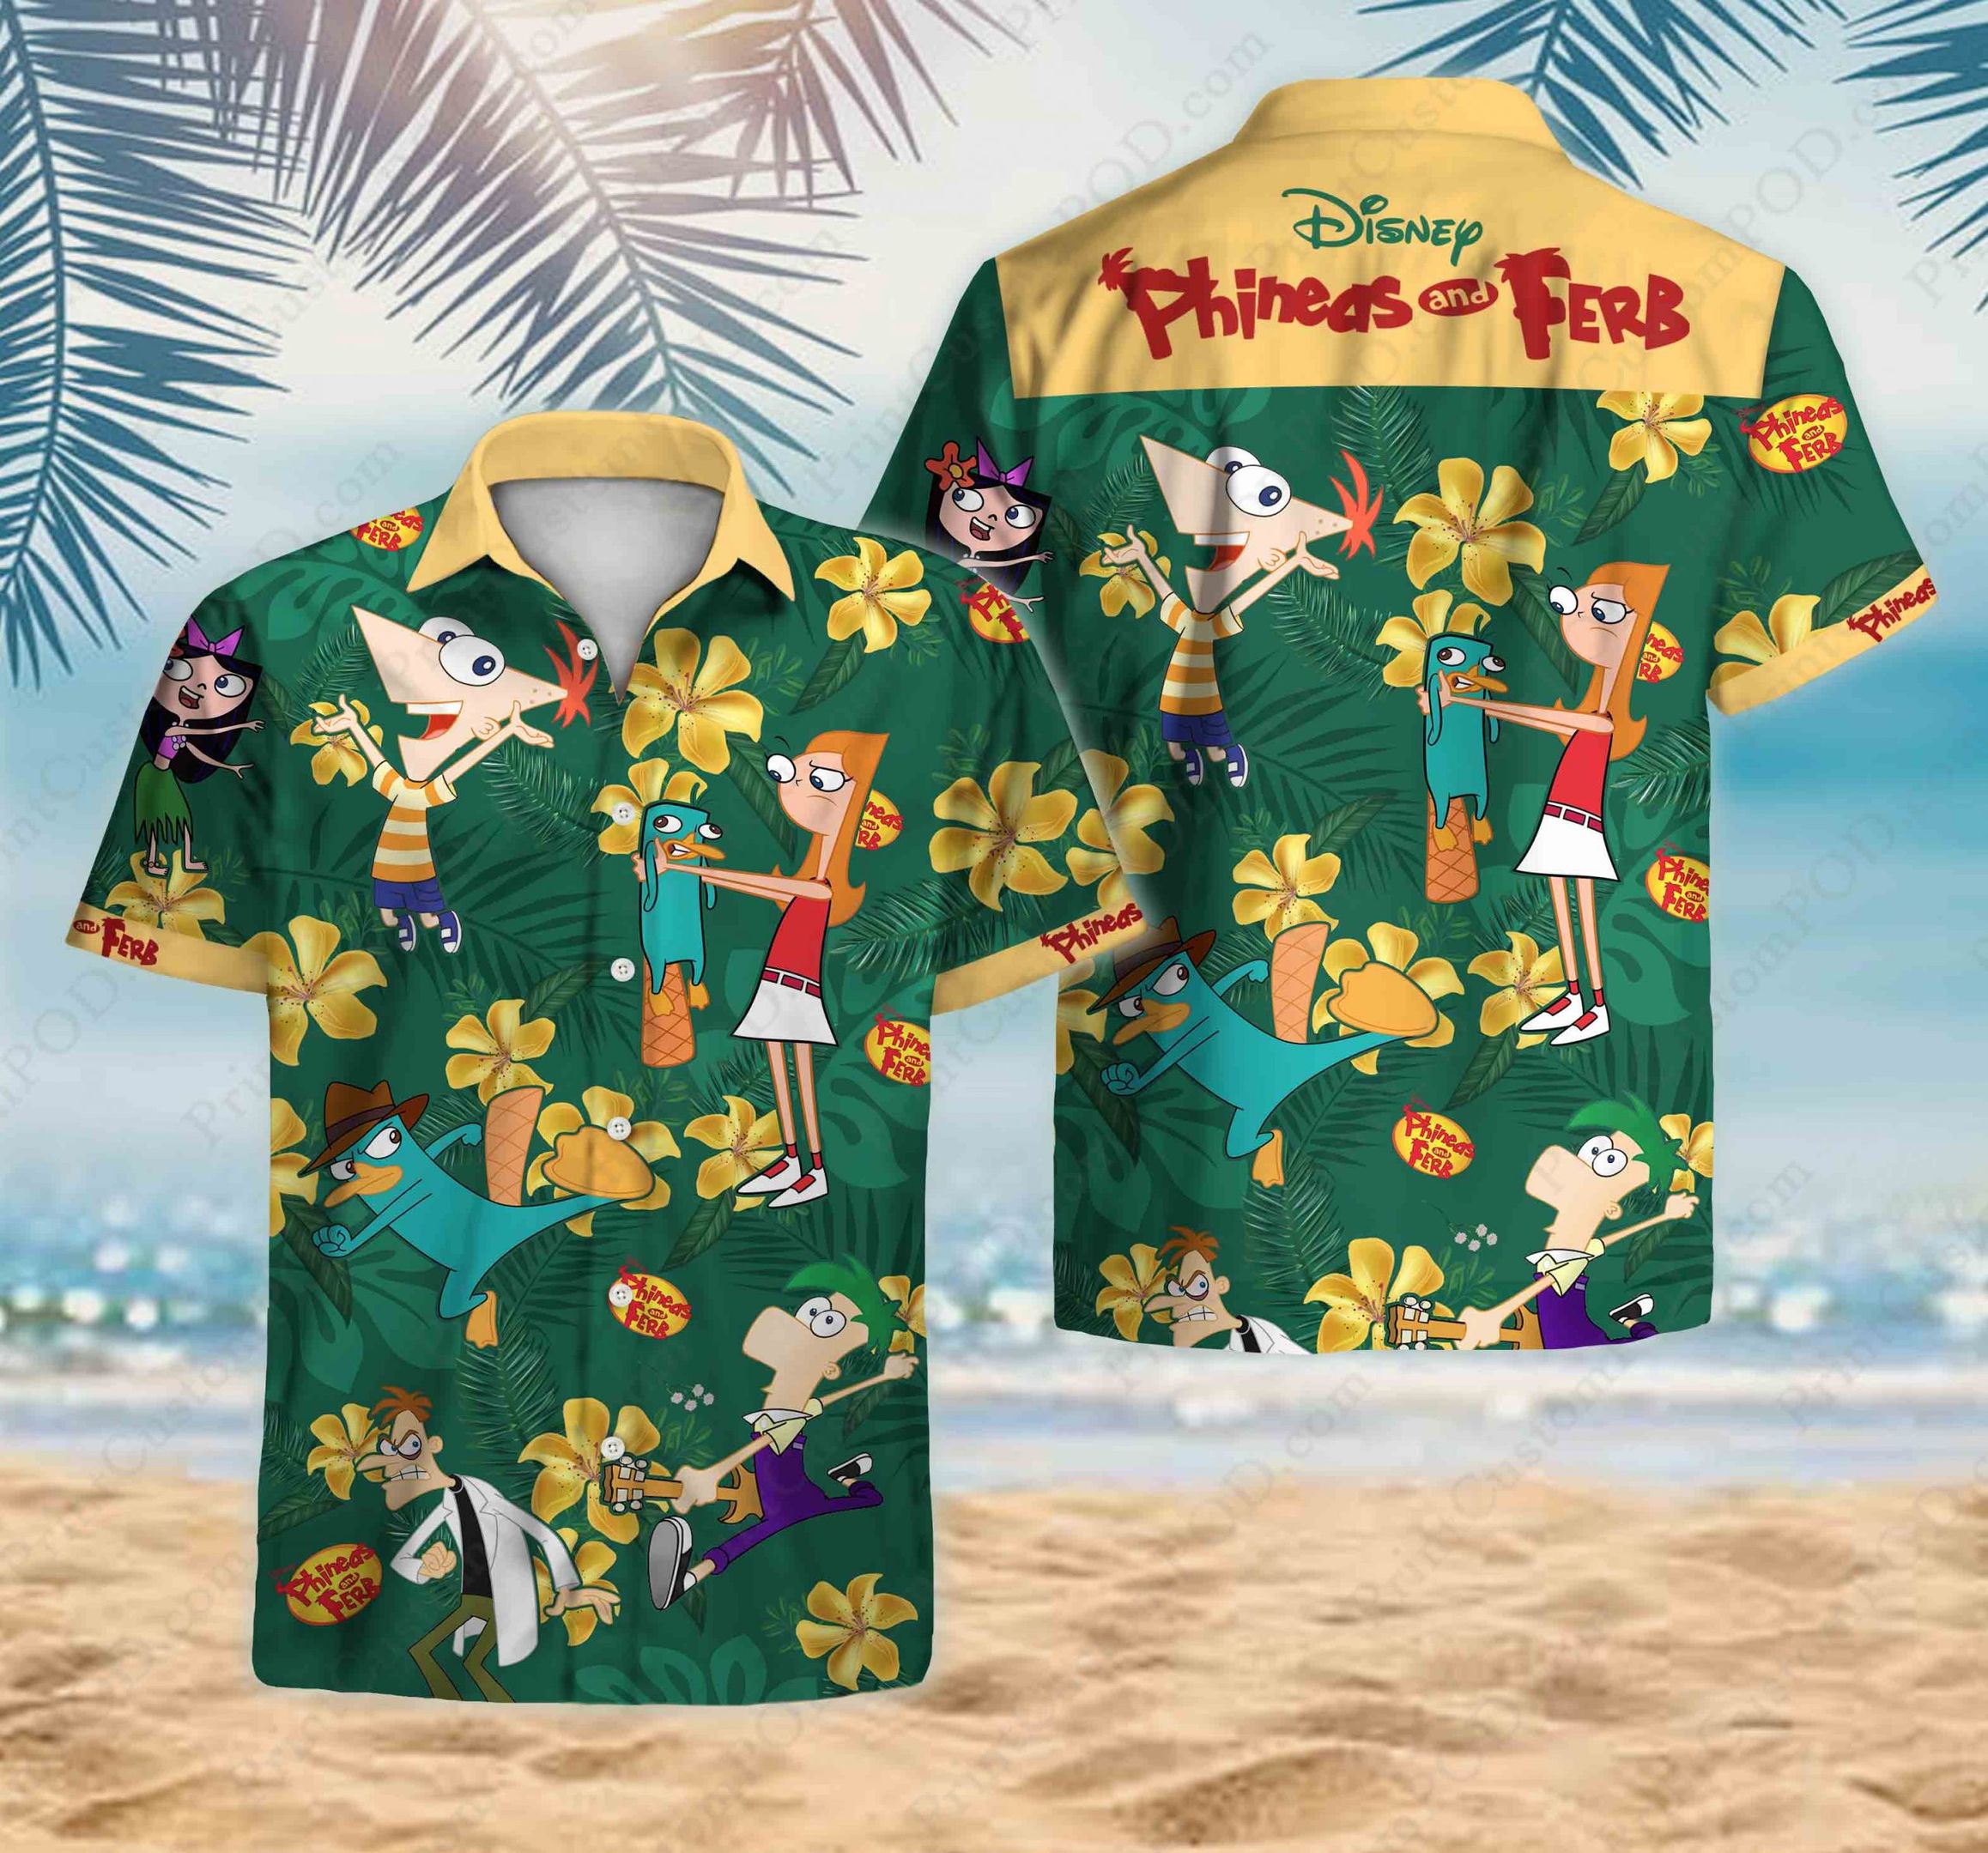 HAWAII SHIRT Adu Phineas Ferb Hawaii Short Sleeve Shirt yr-ZX11224 